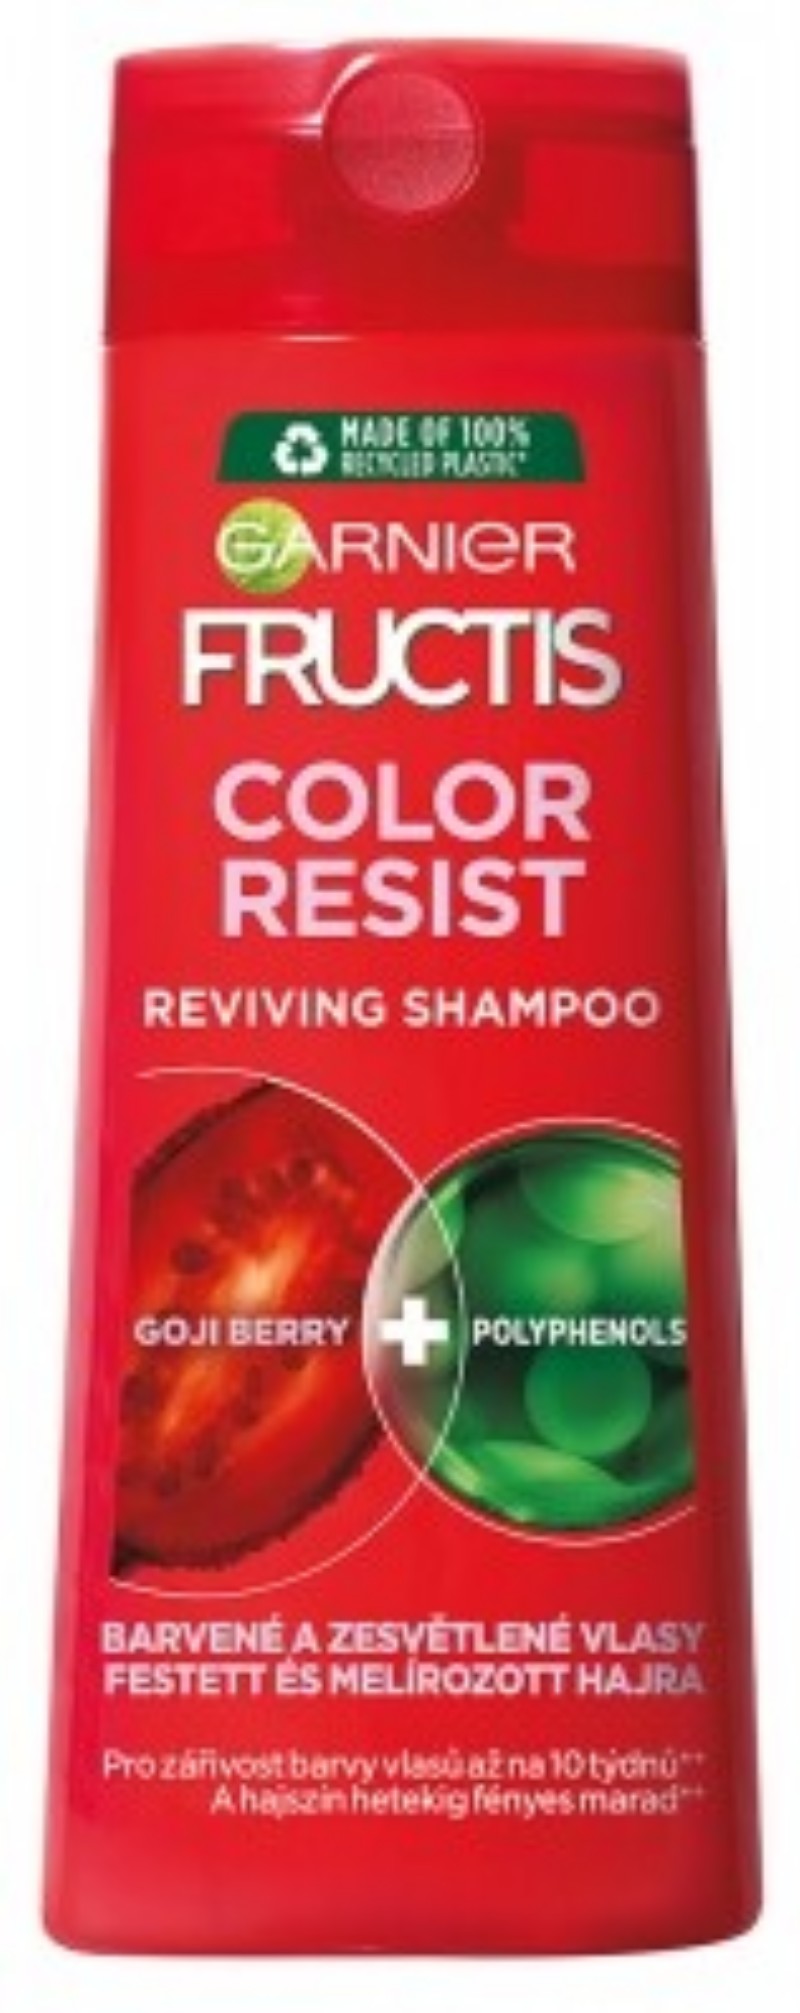 Sampon Fructis Garnier 250ml Color Resist